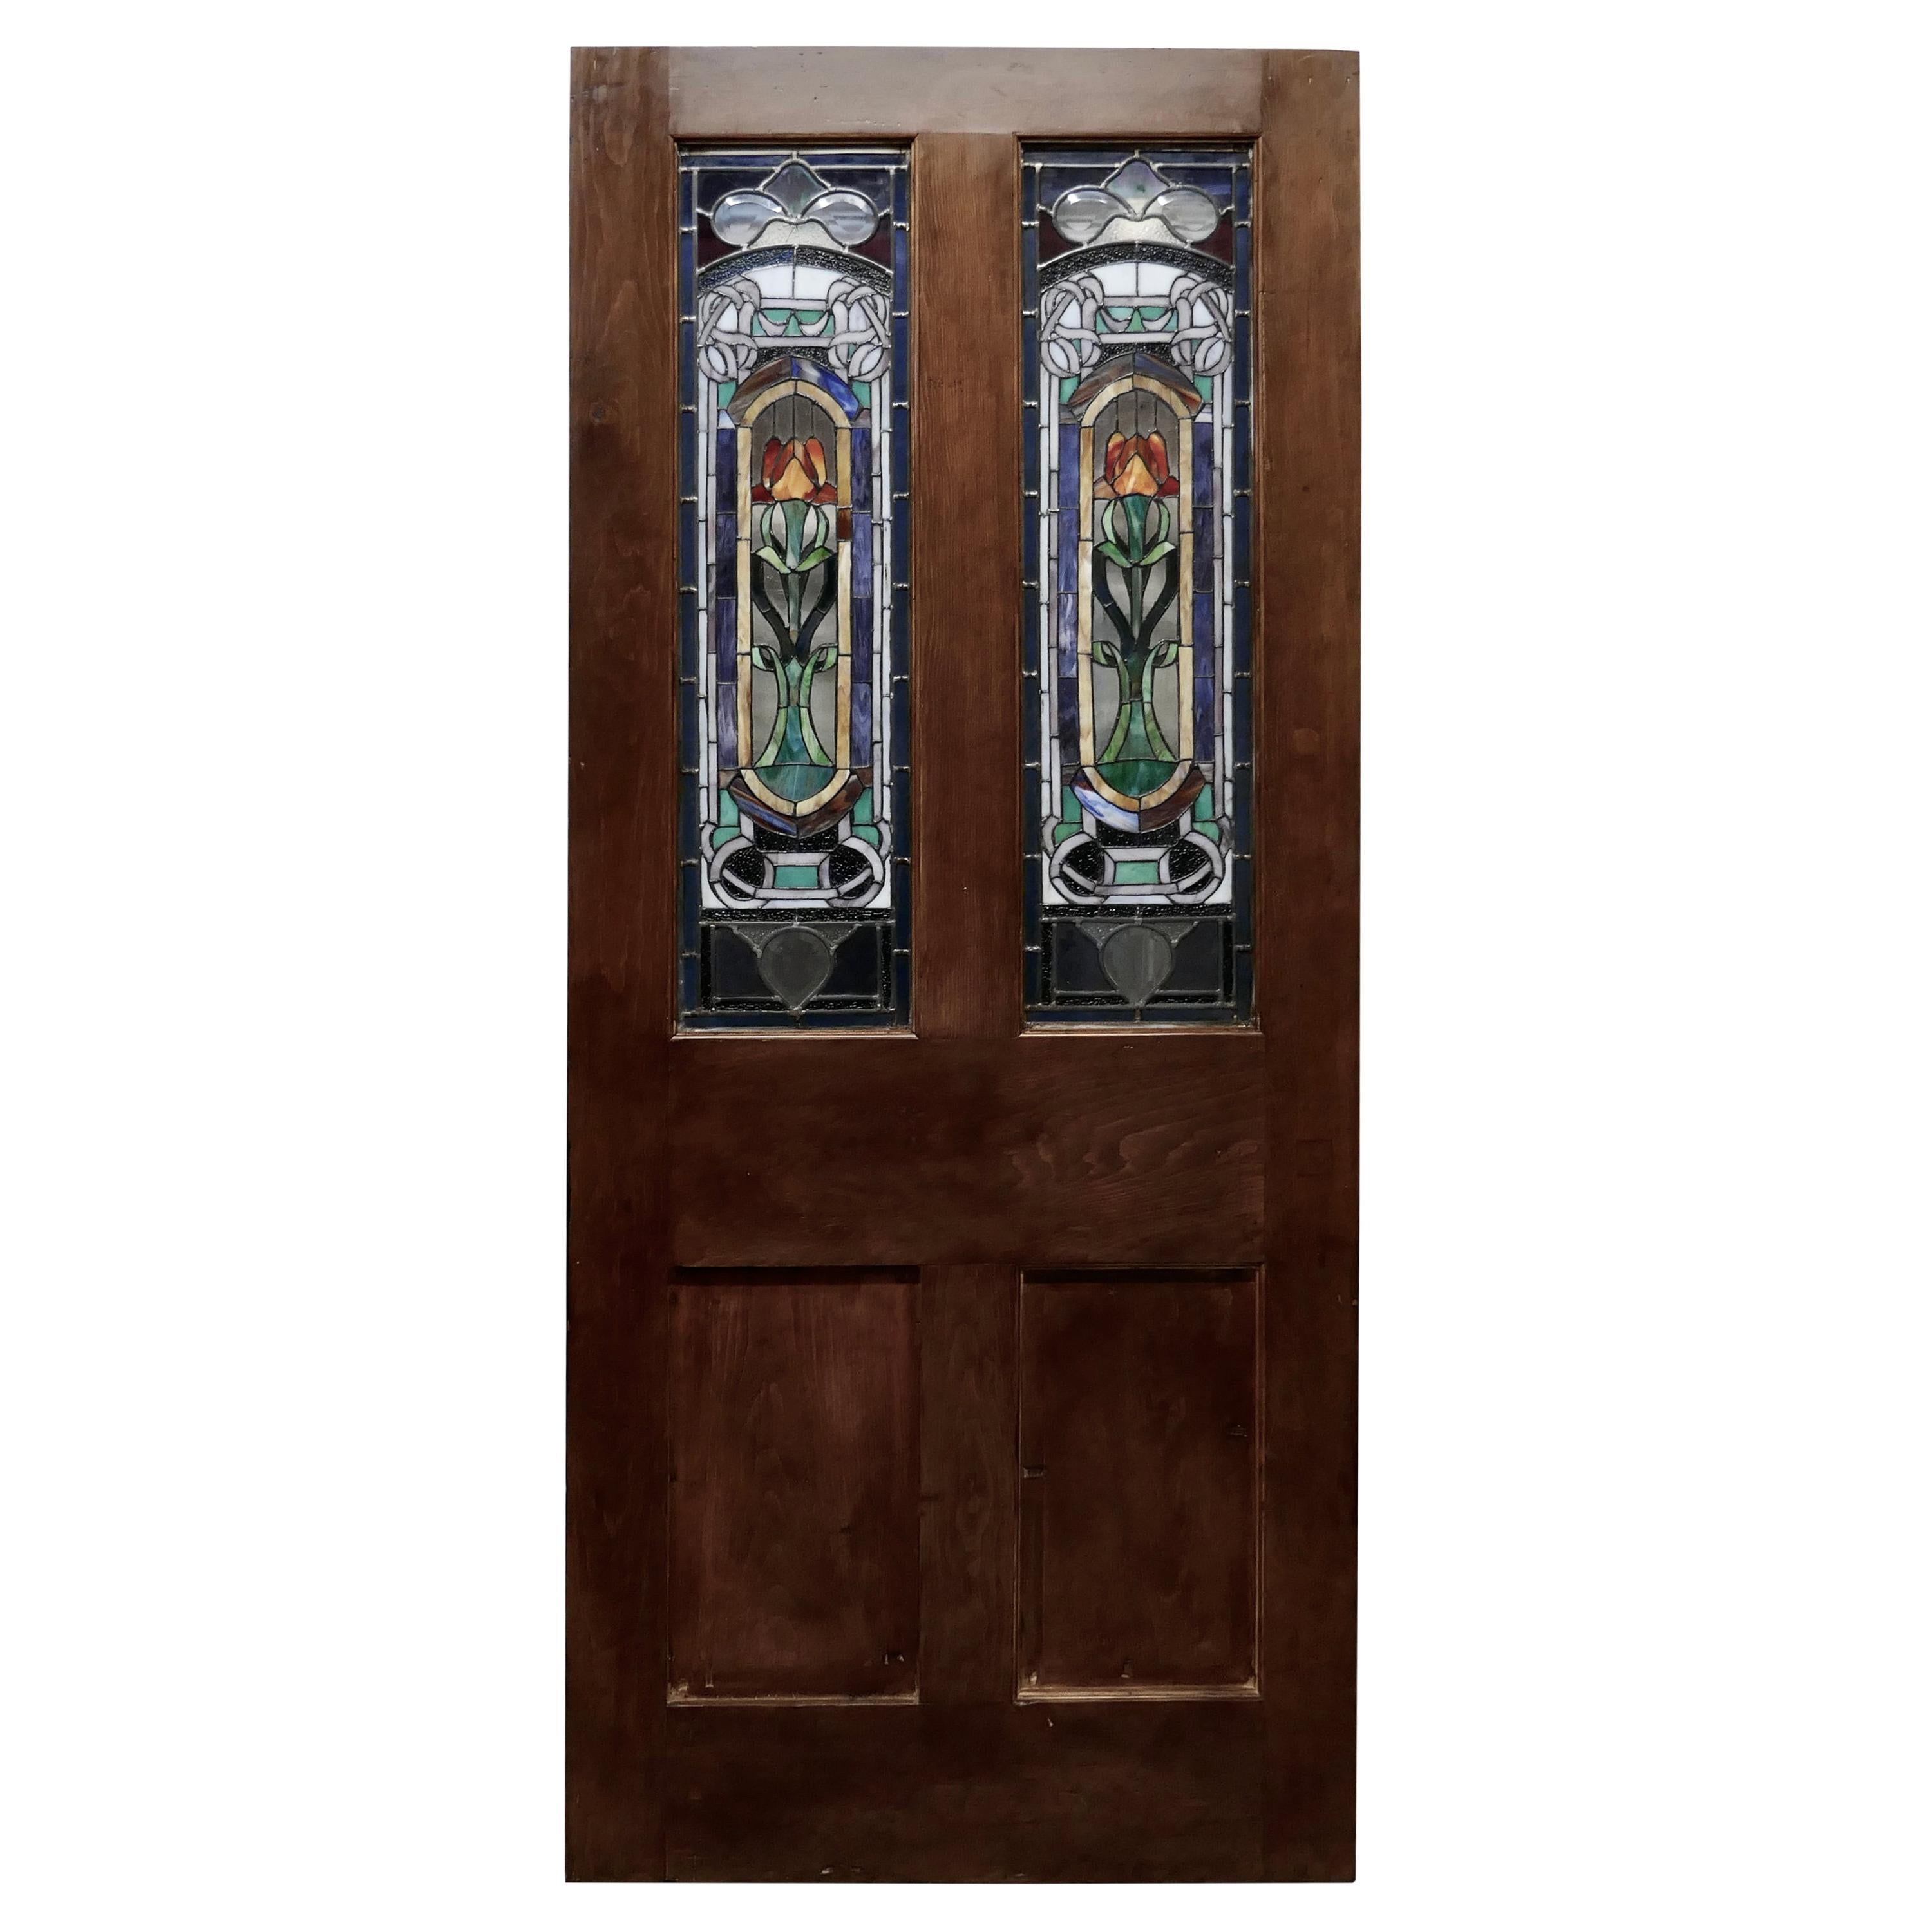 Victorian Art Nouveau Stained Glass Panel Door